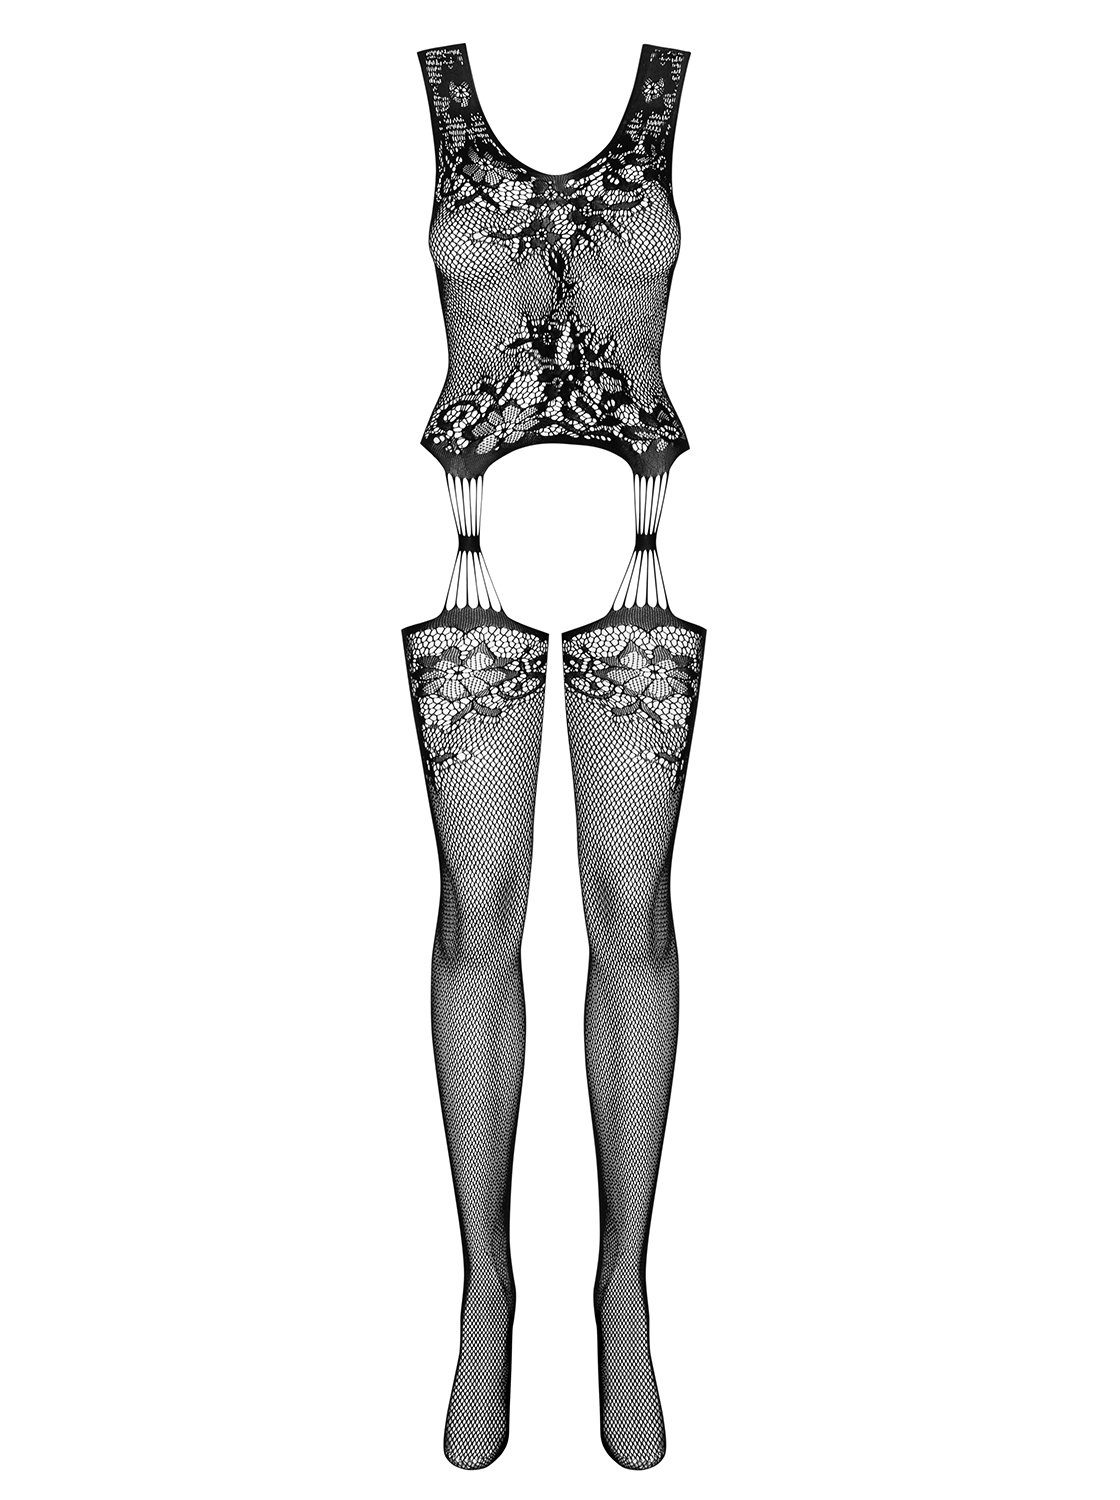 Damen Bodies Obsessive Body Straps Catsuit schwarz transparent Open Body Stock